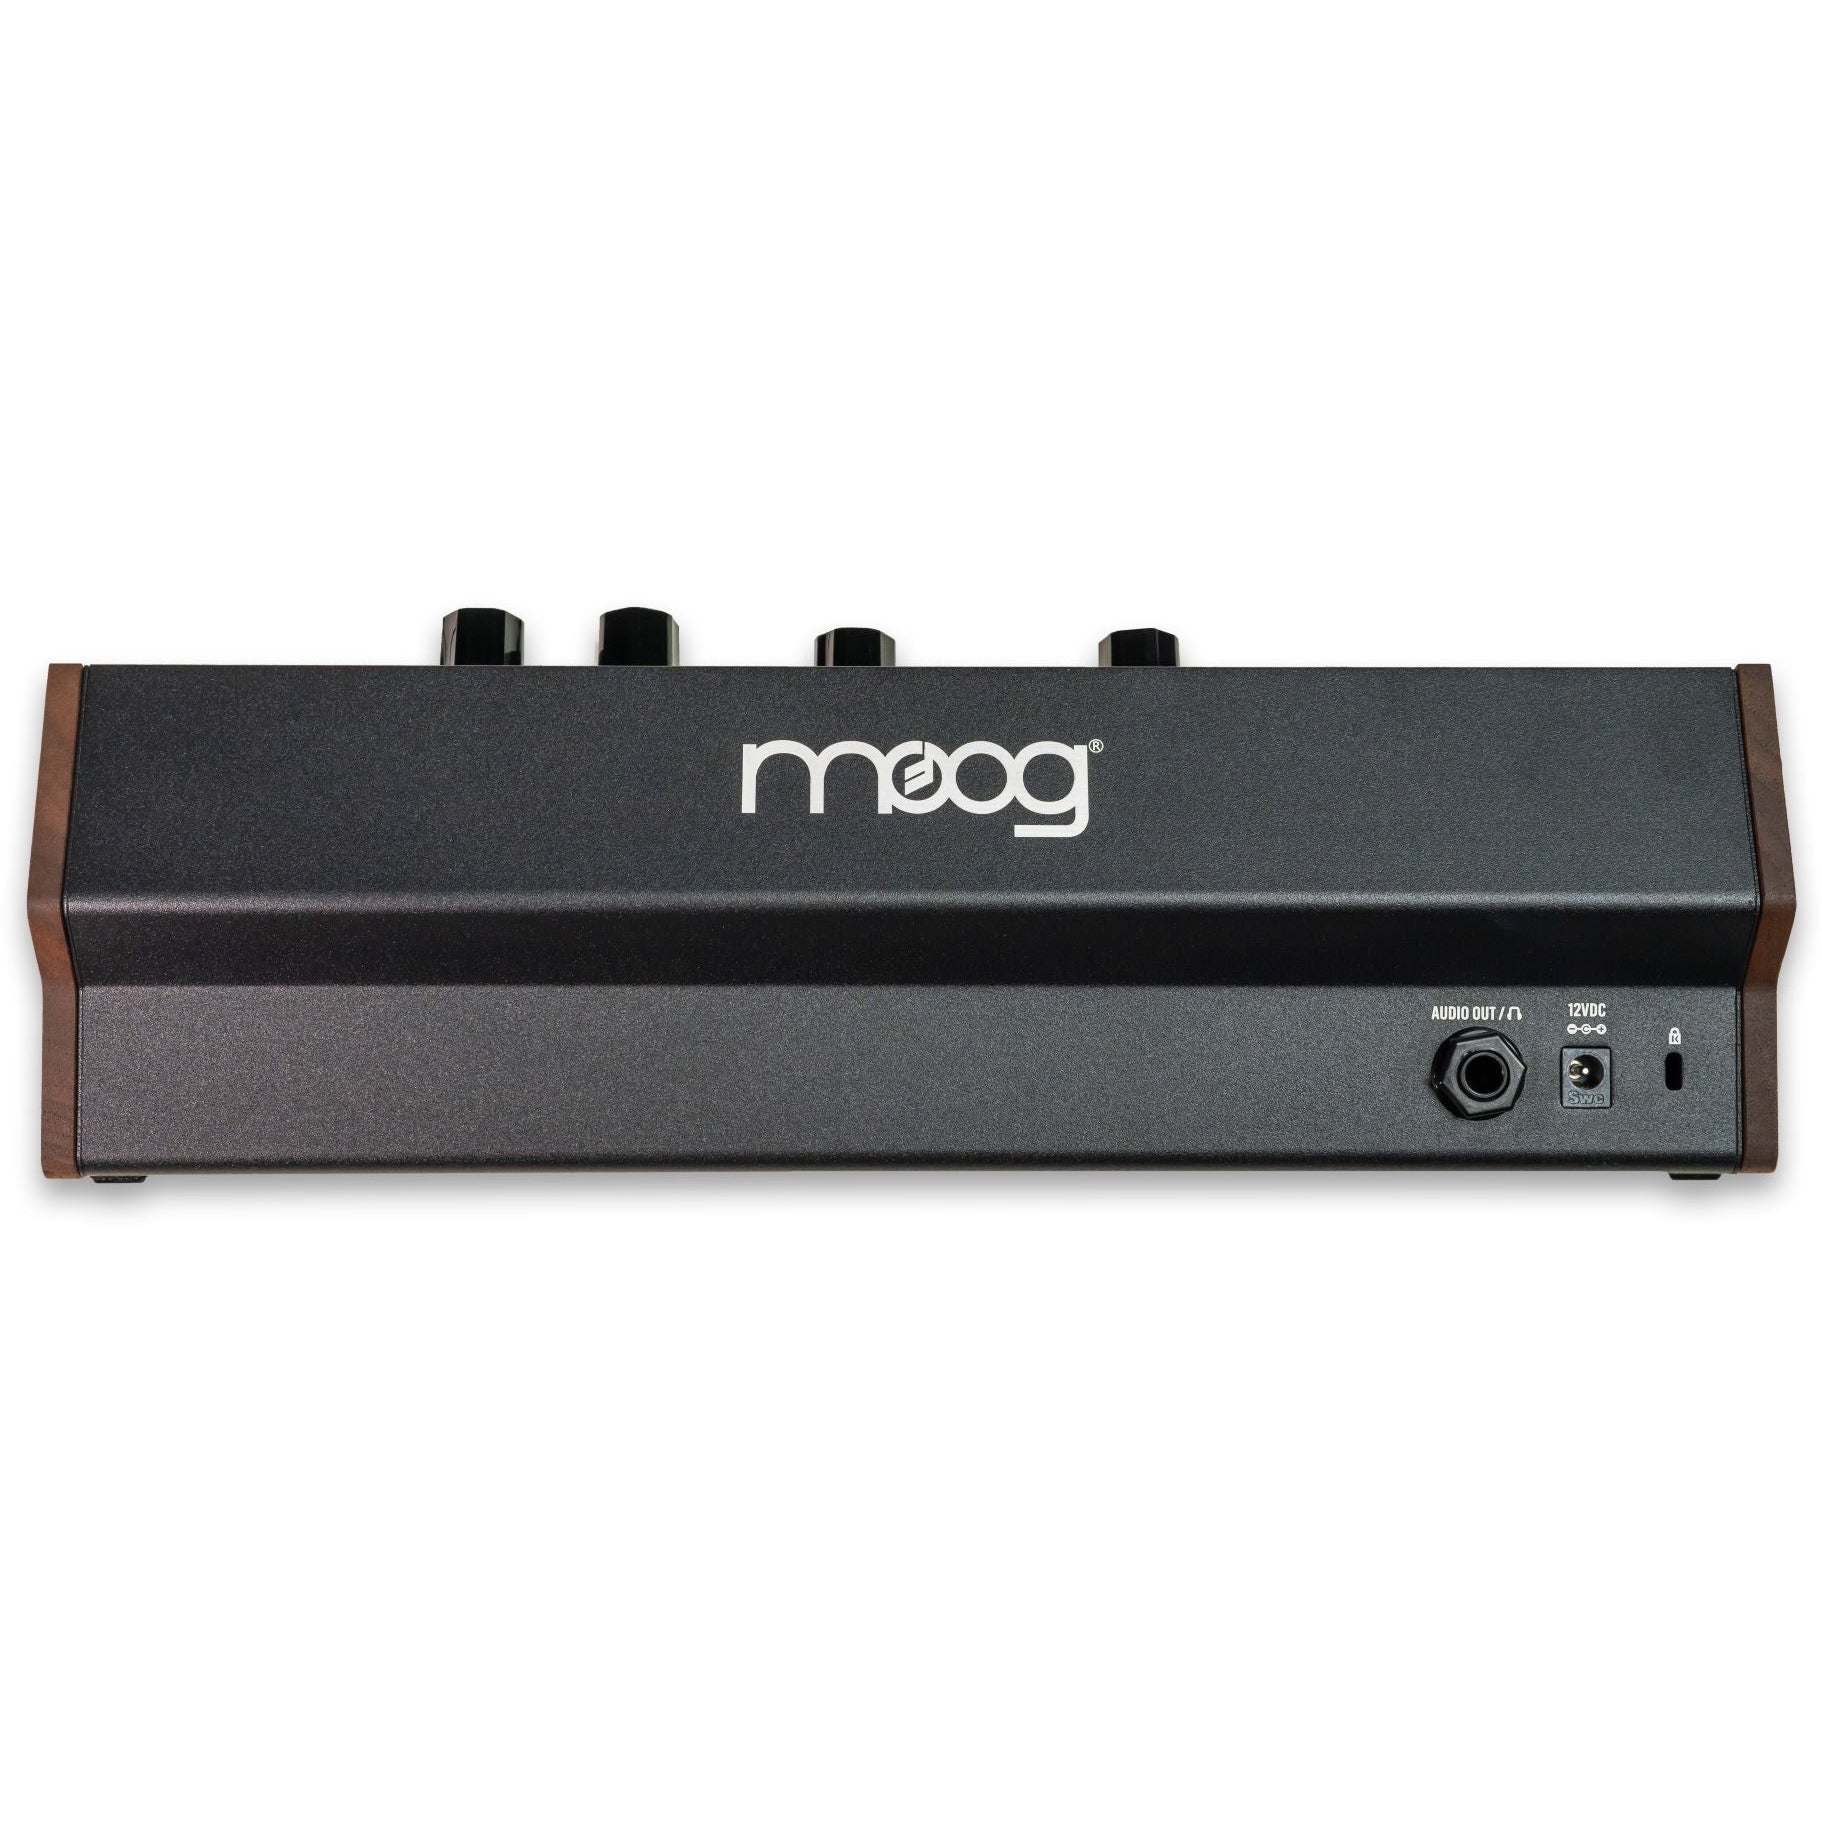 MOOG Subharmonicon semi-modular polyrhythmic analog synth - The